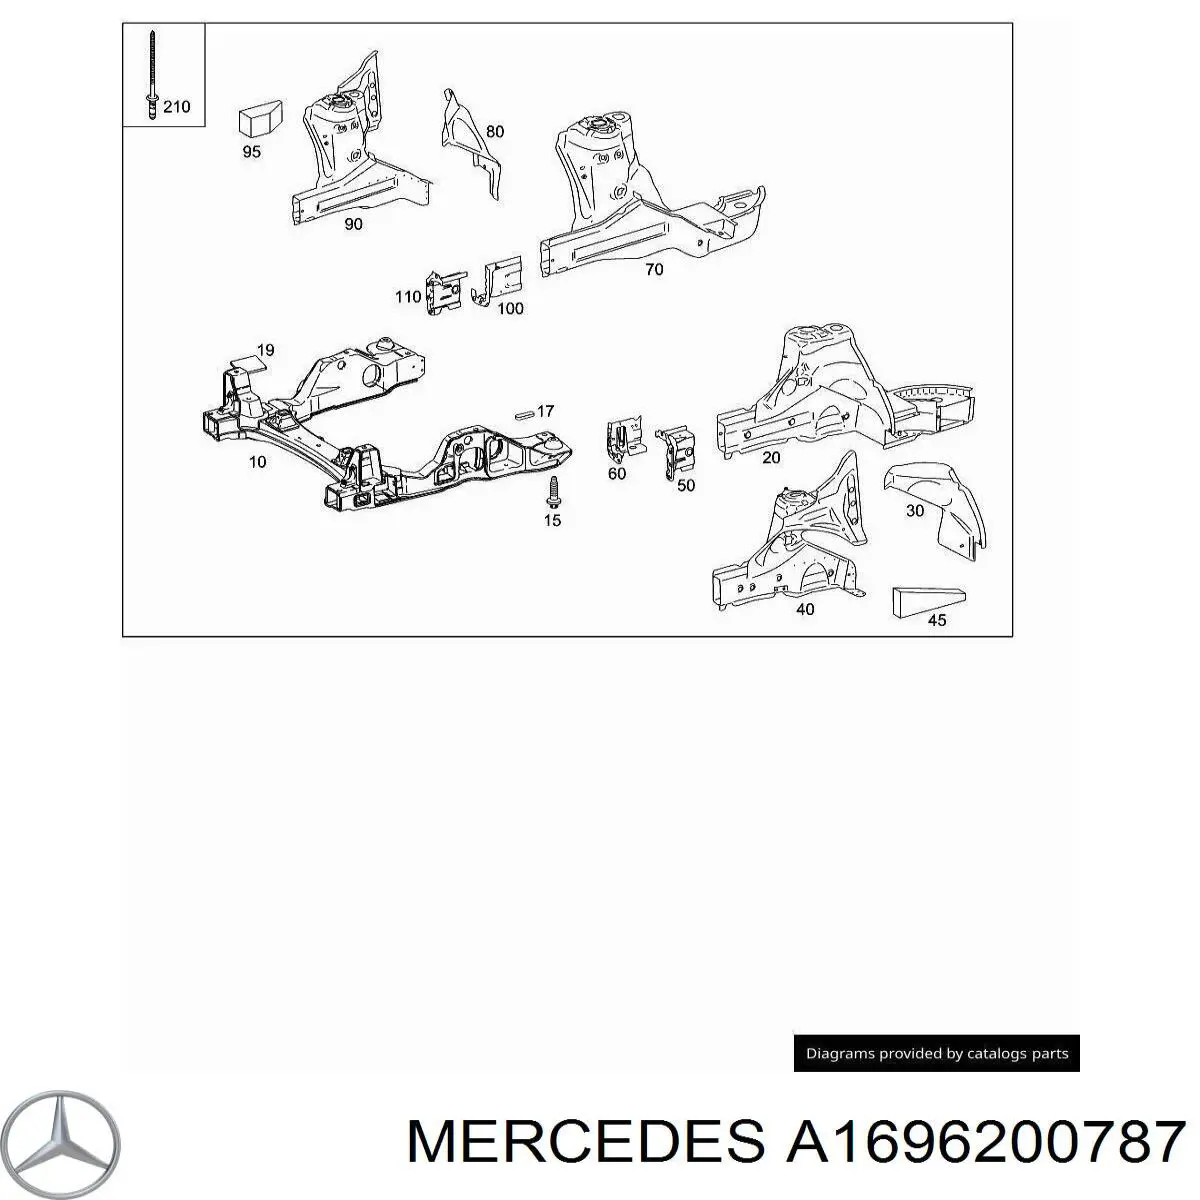 A1696200787 Mercedes